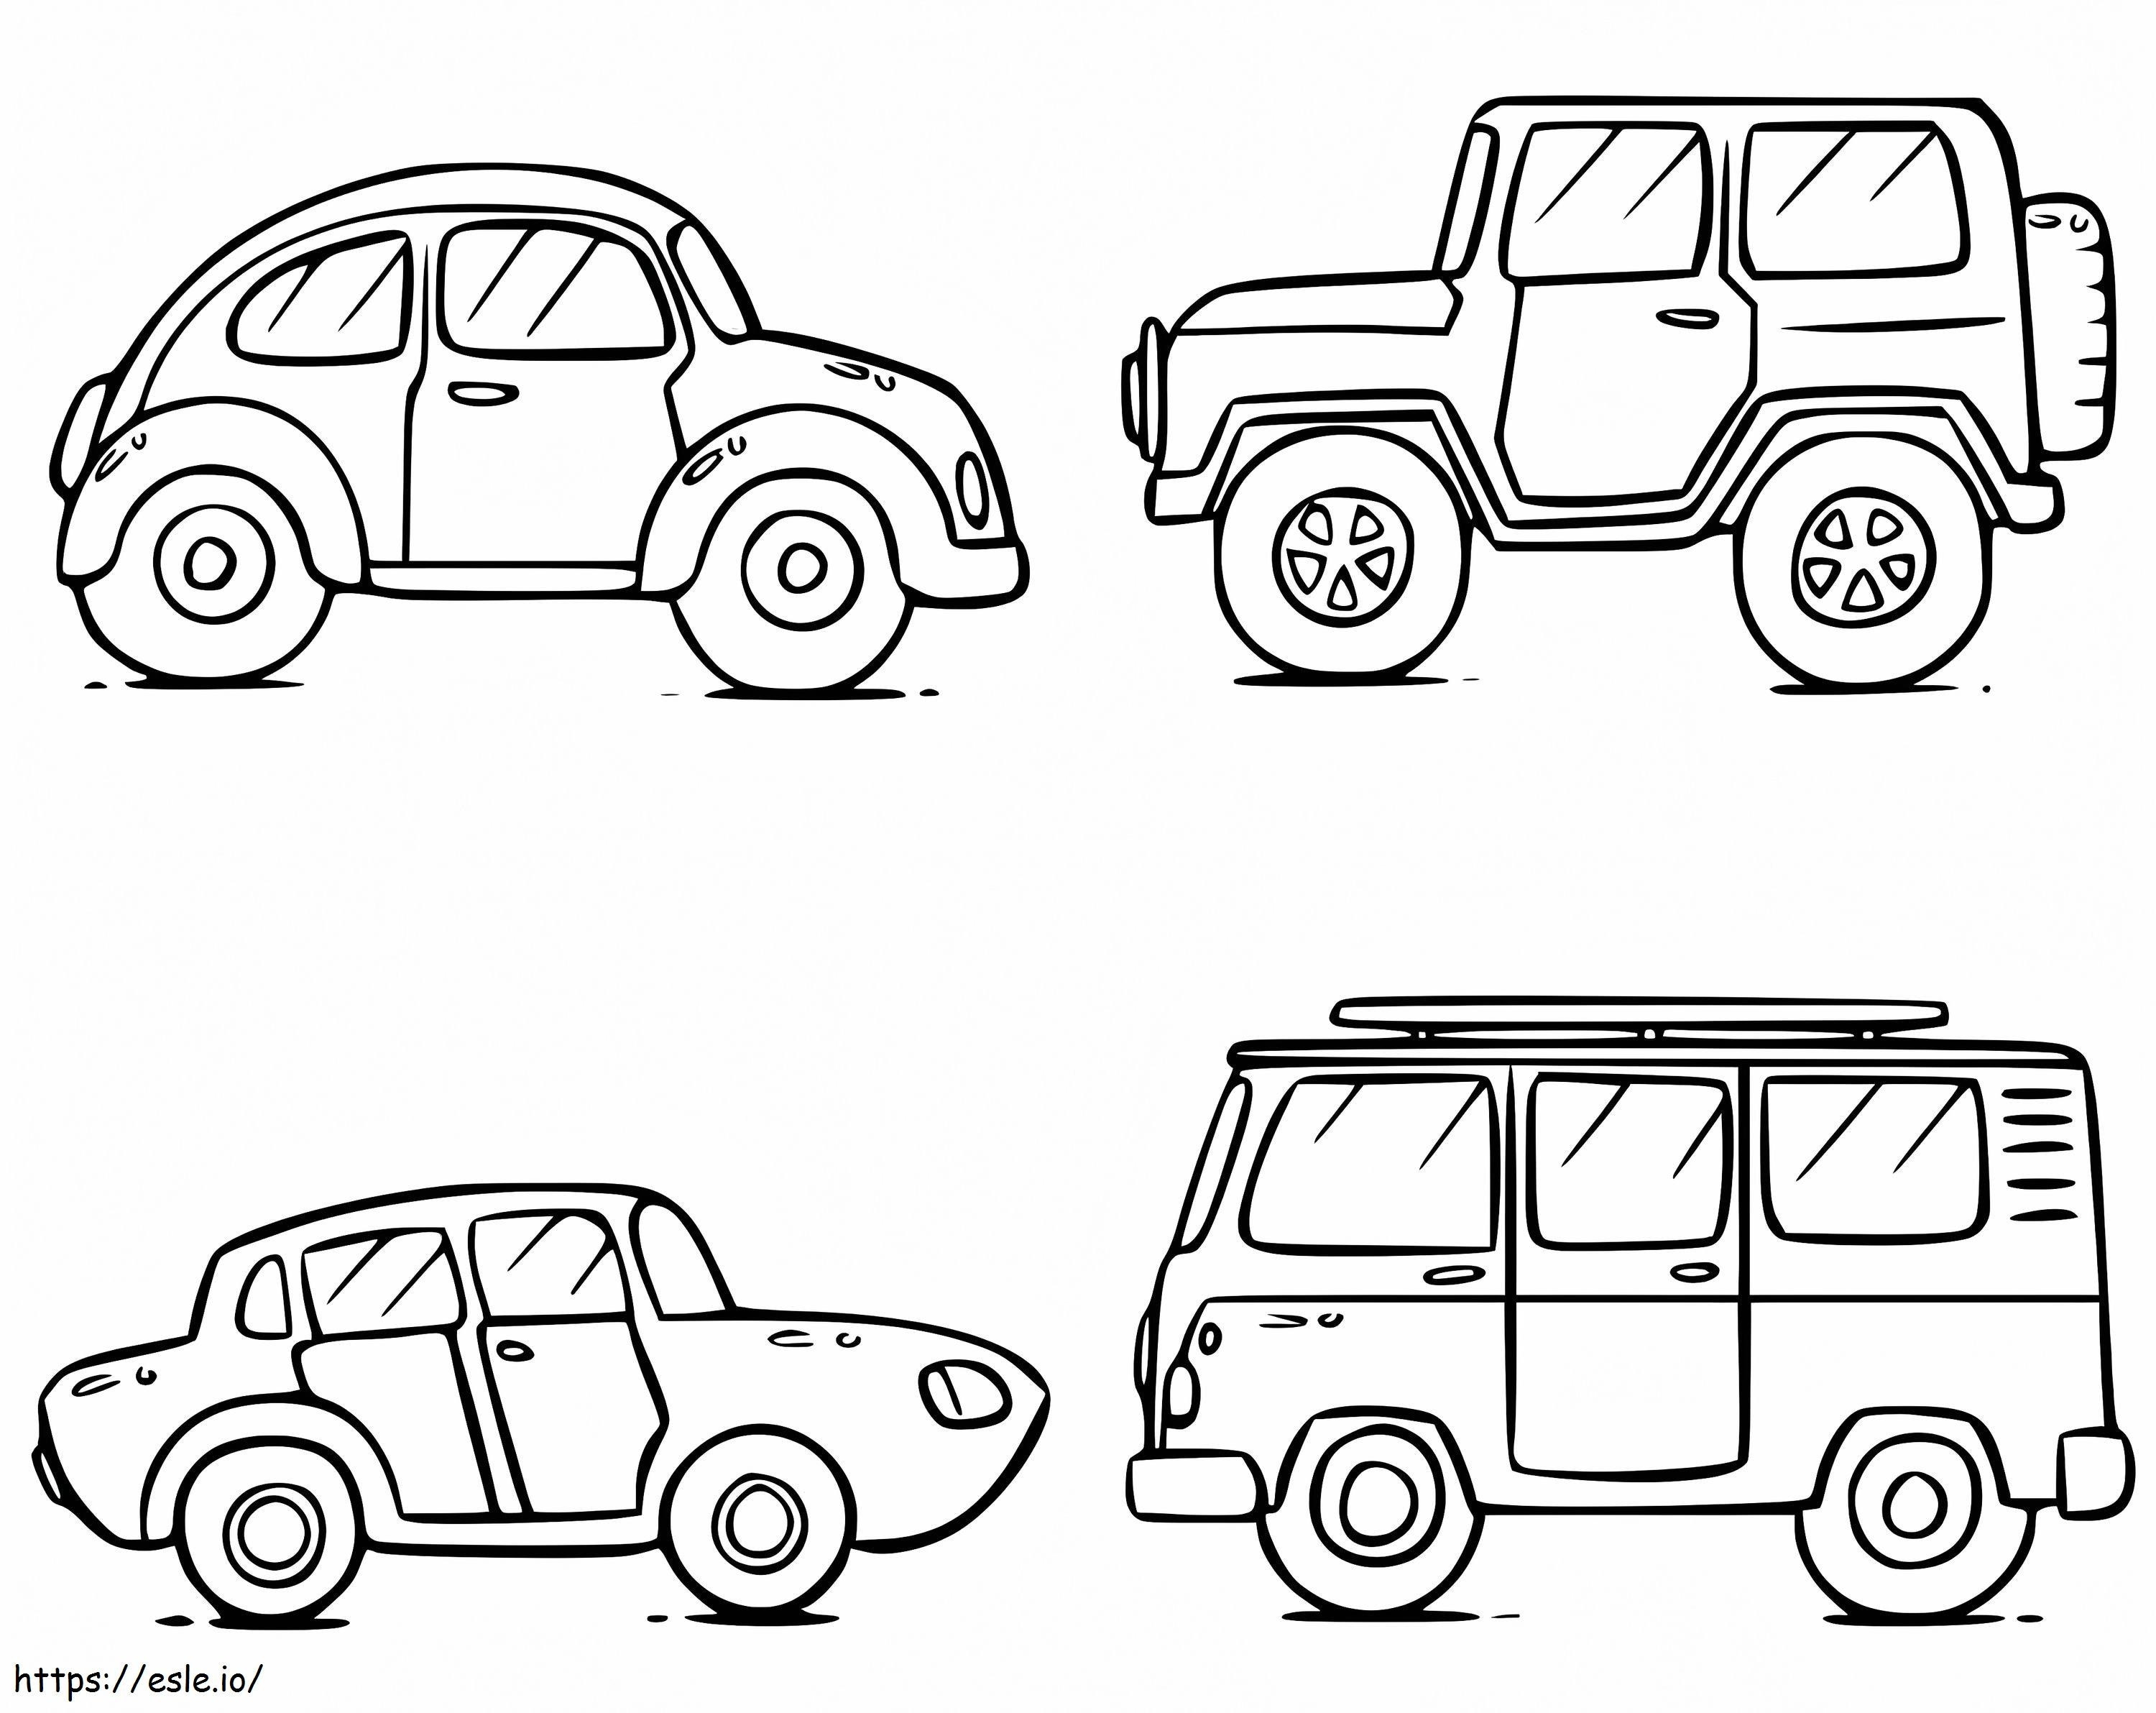 Quatro carros para colorir